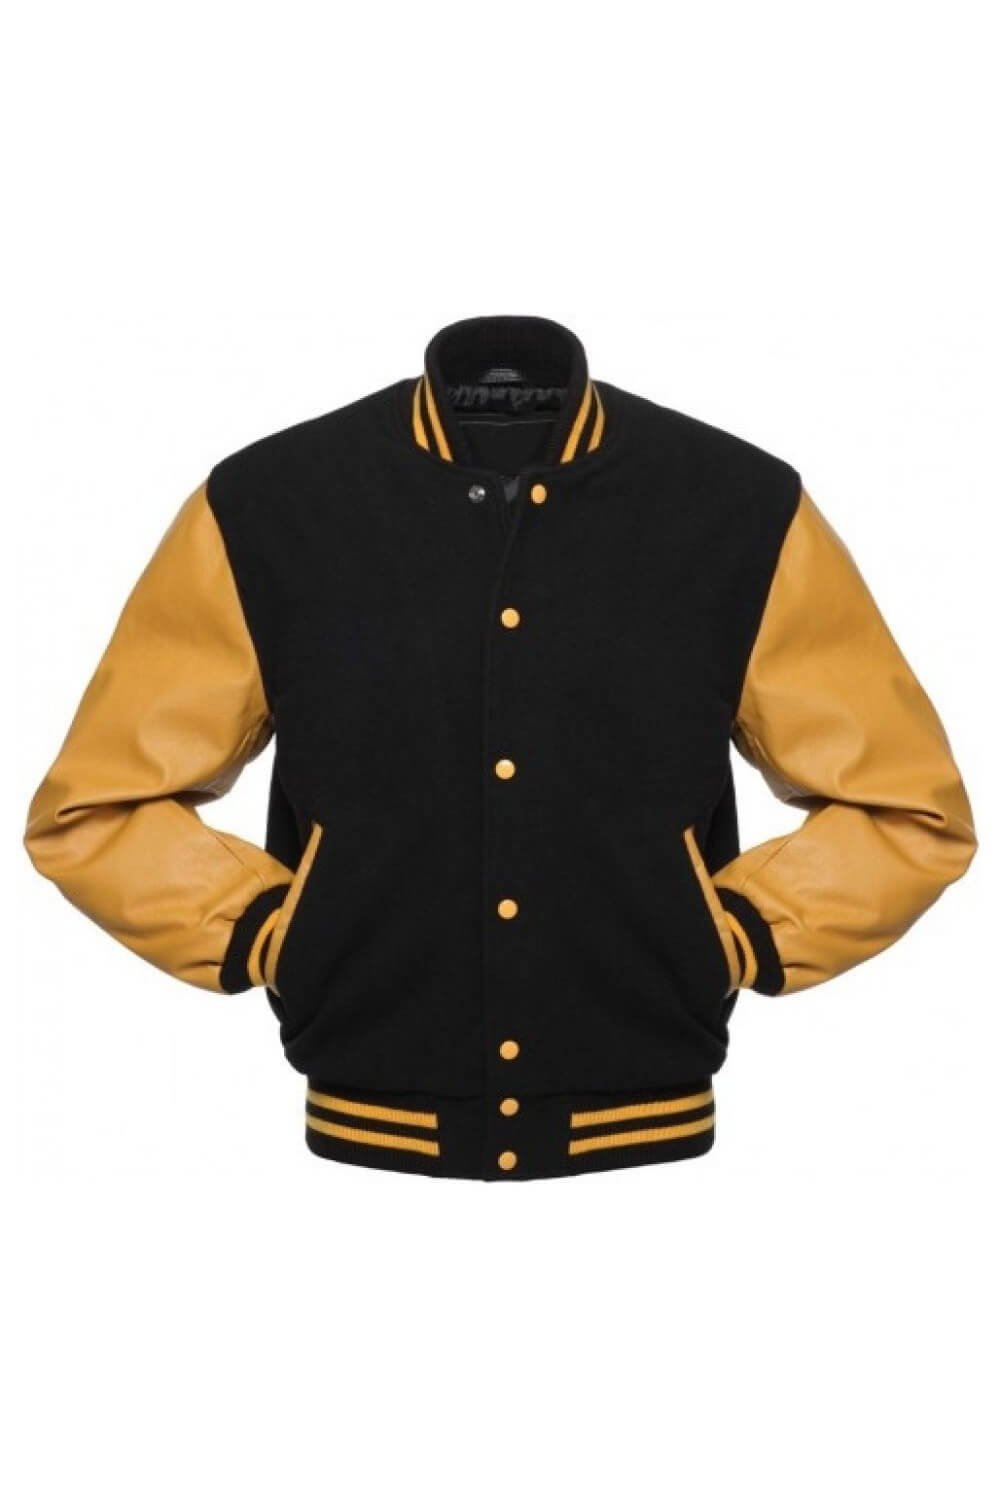 Yellow Wool and Genuine Black Leather Sleeves Baseball Jacket